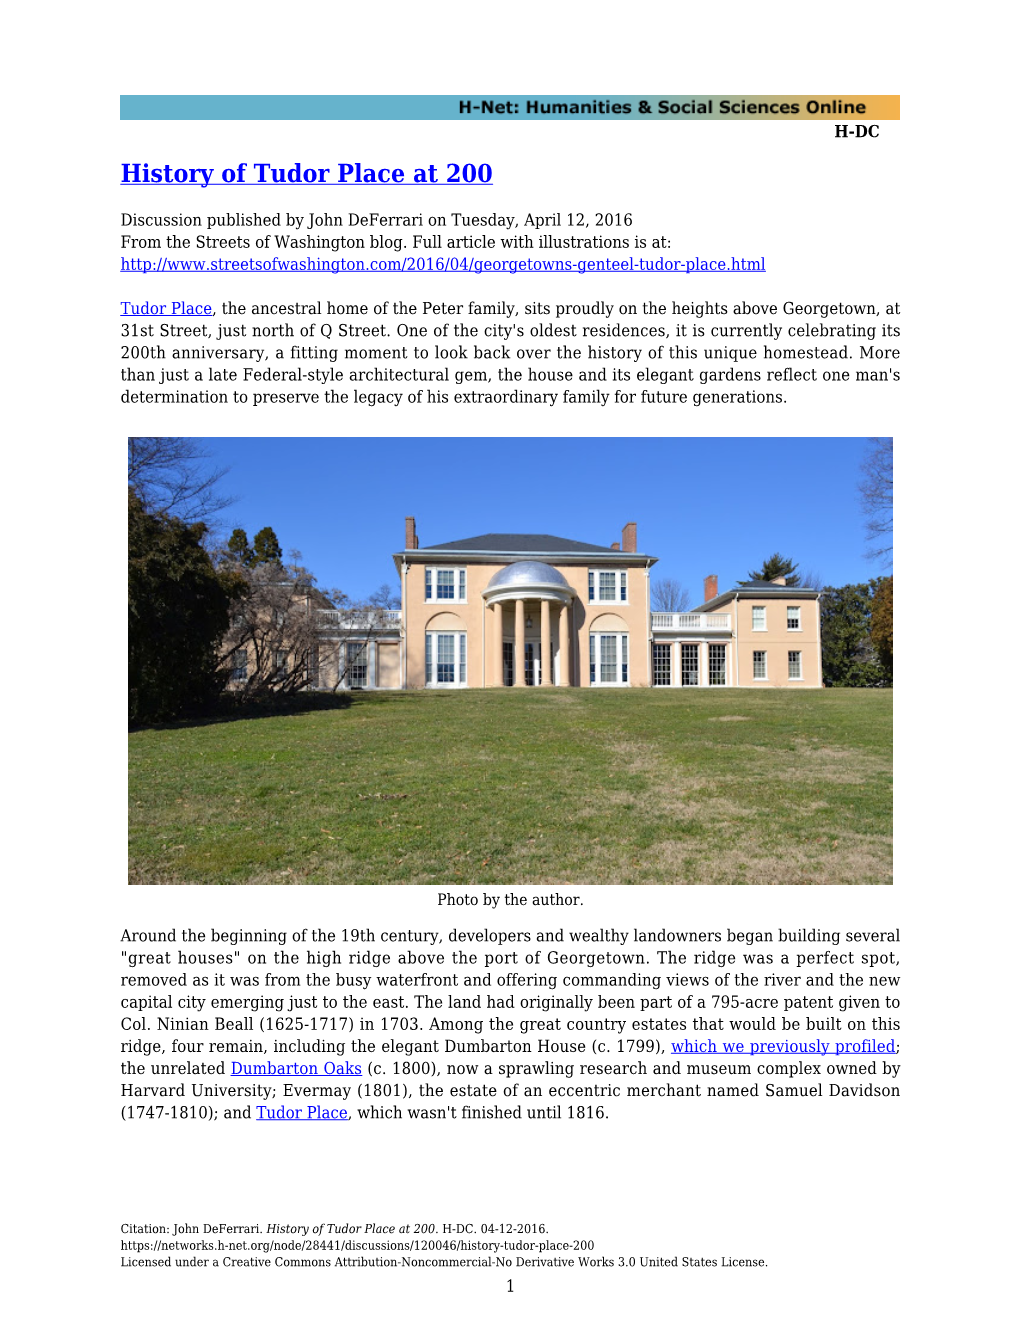 History of Tudor Place at 200